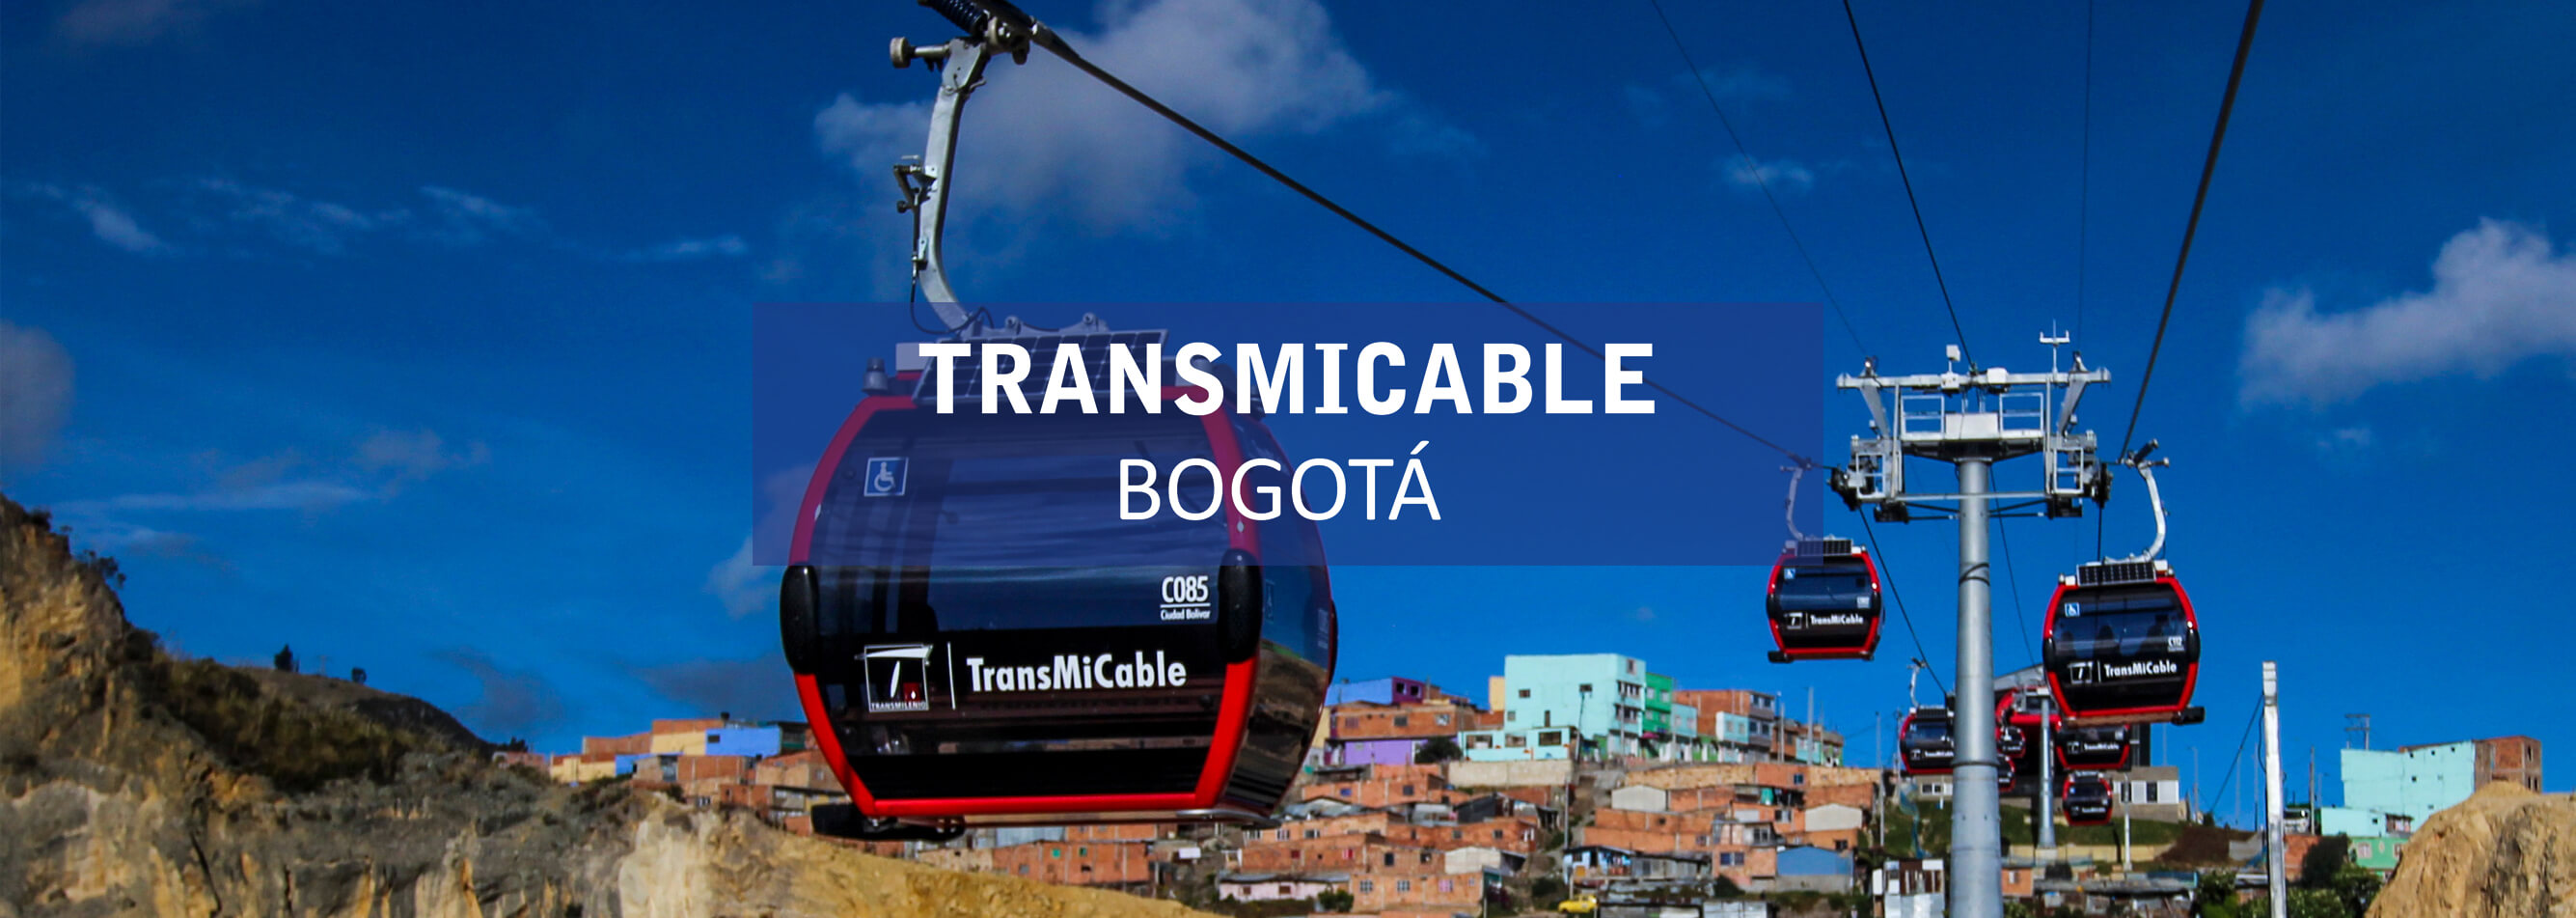 TransMicable in Bogota